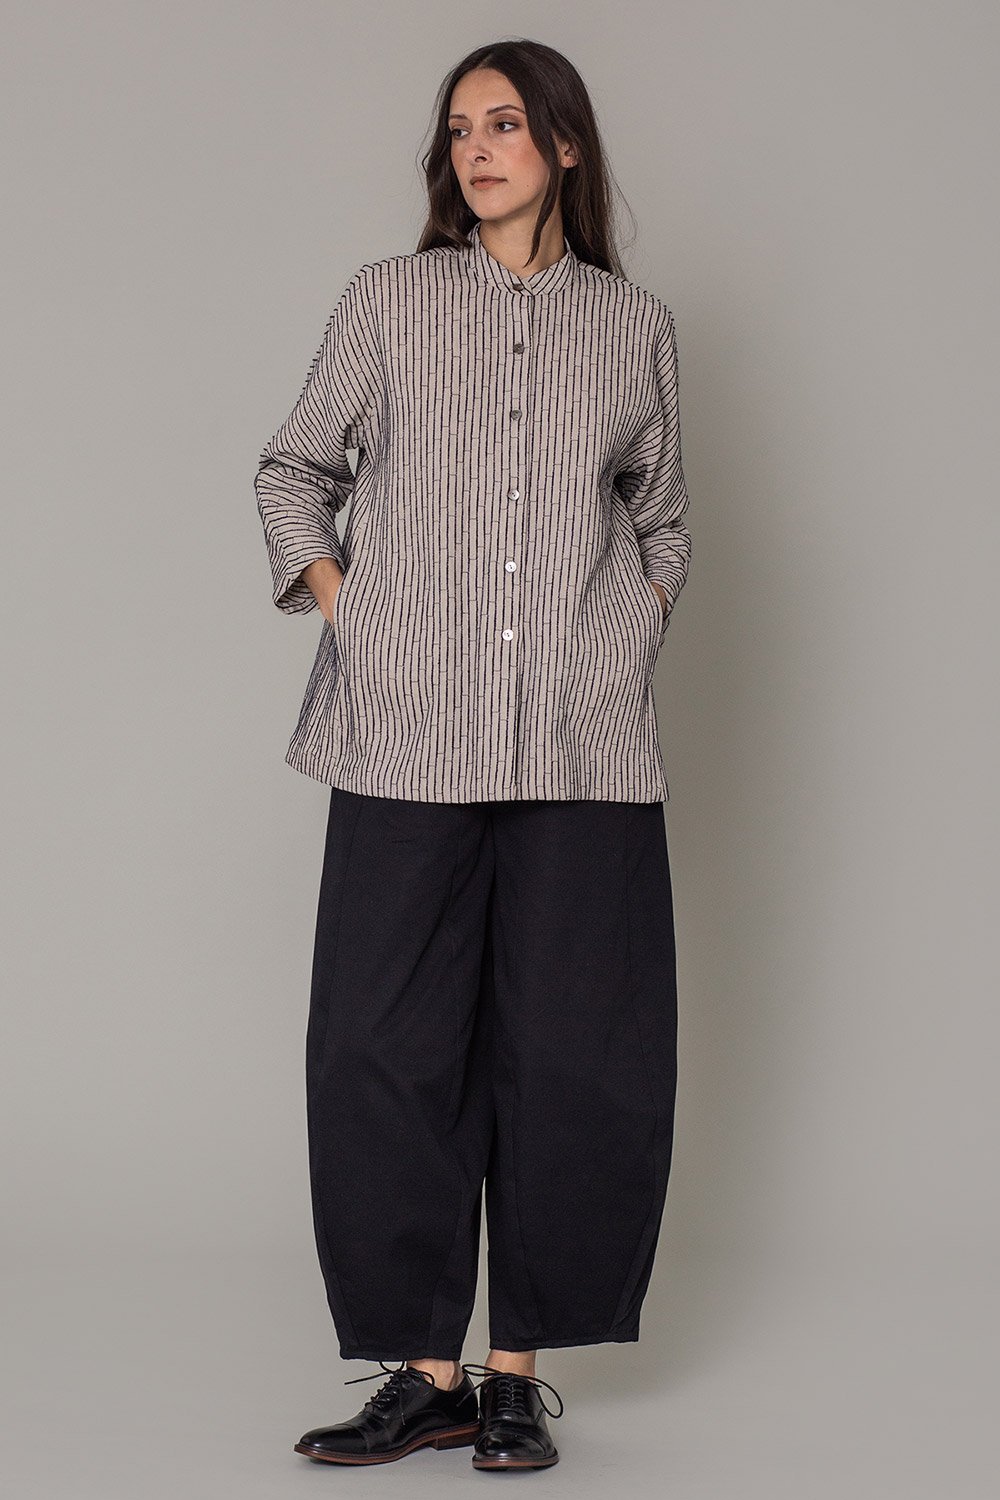 Japan Shirt in Contemporary Japanese Nuno Linen “Hariko” – Natural ...